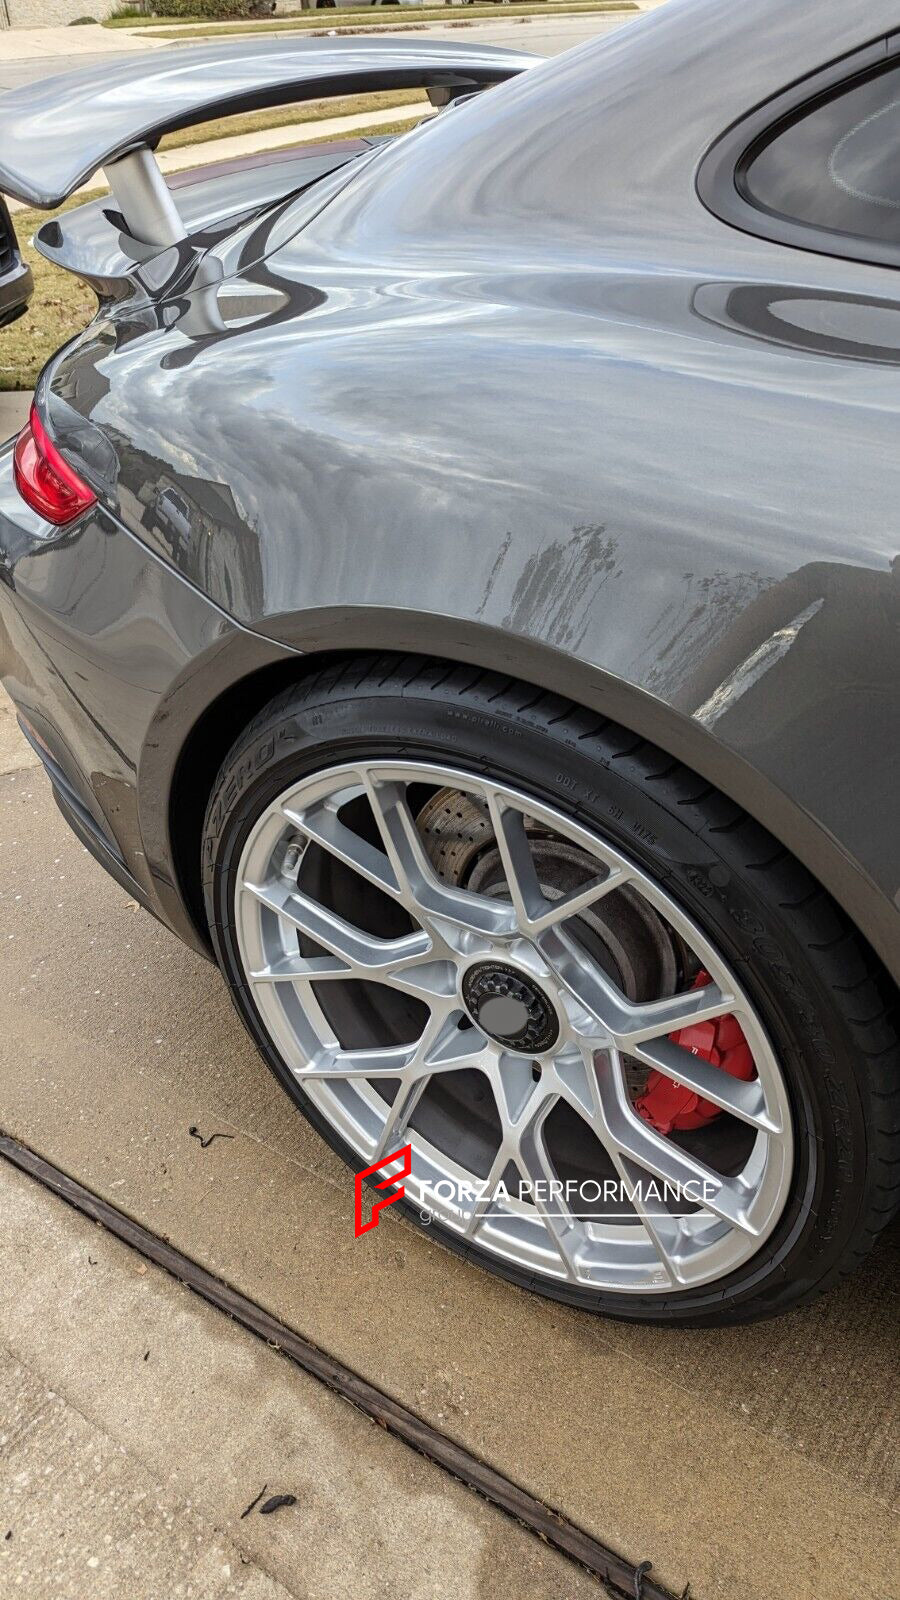 Customer Feedback on Forged Wheels for Porsche